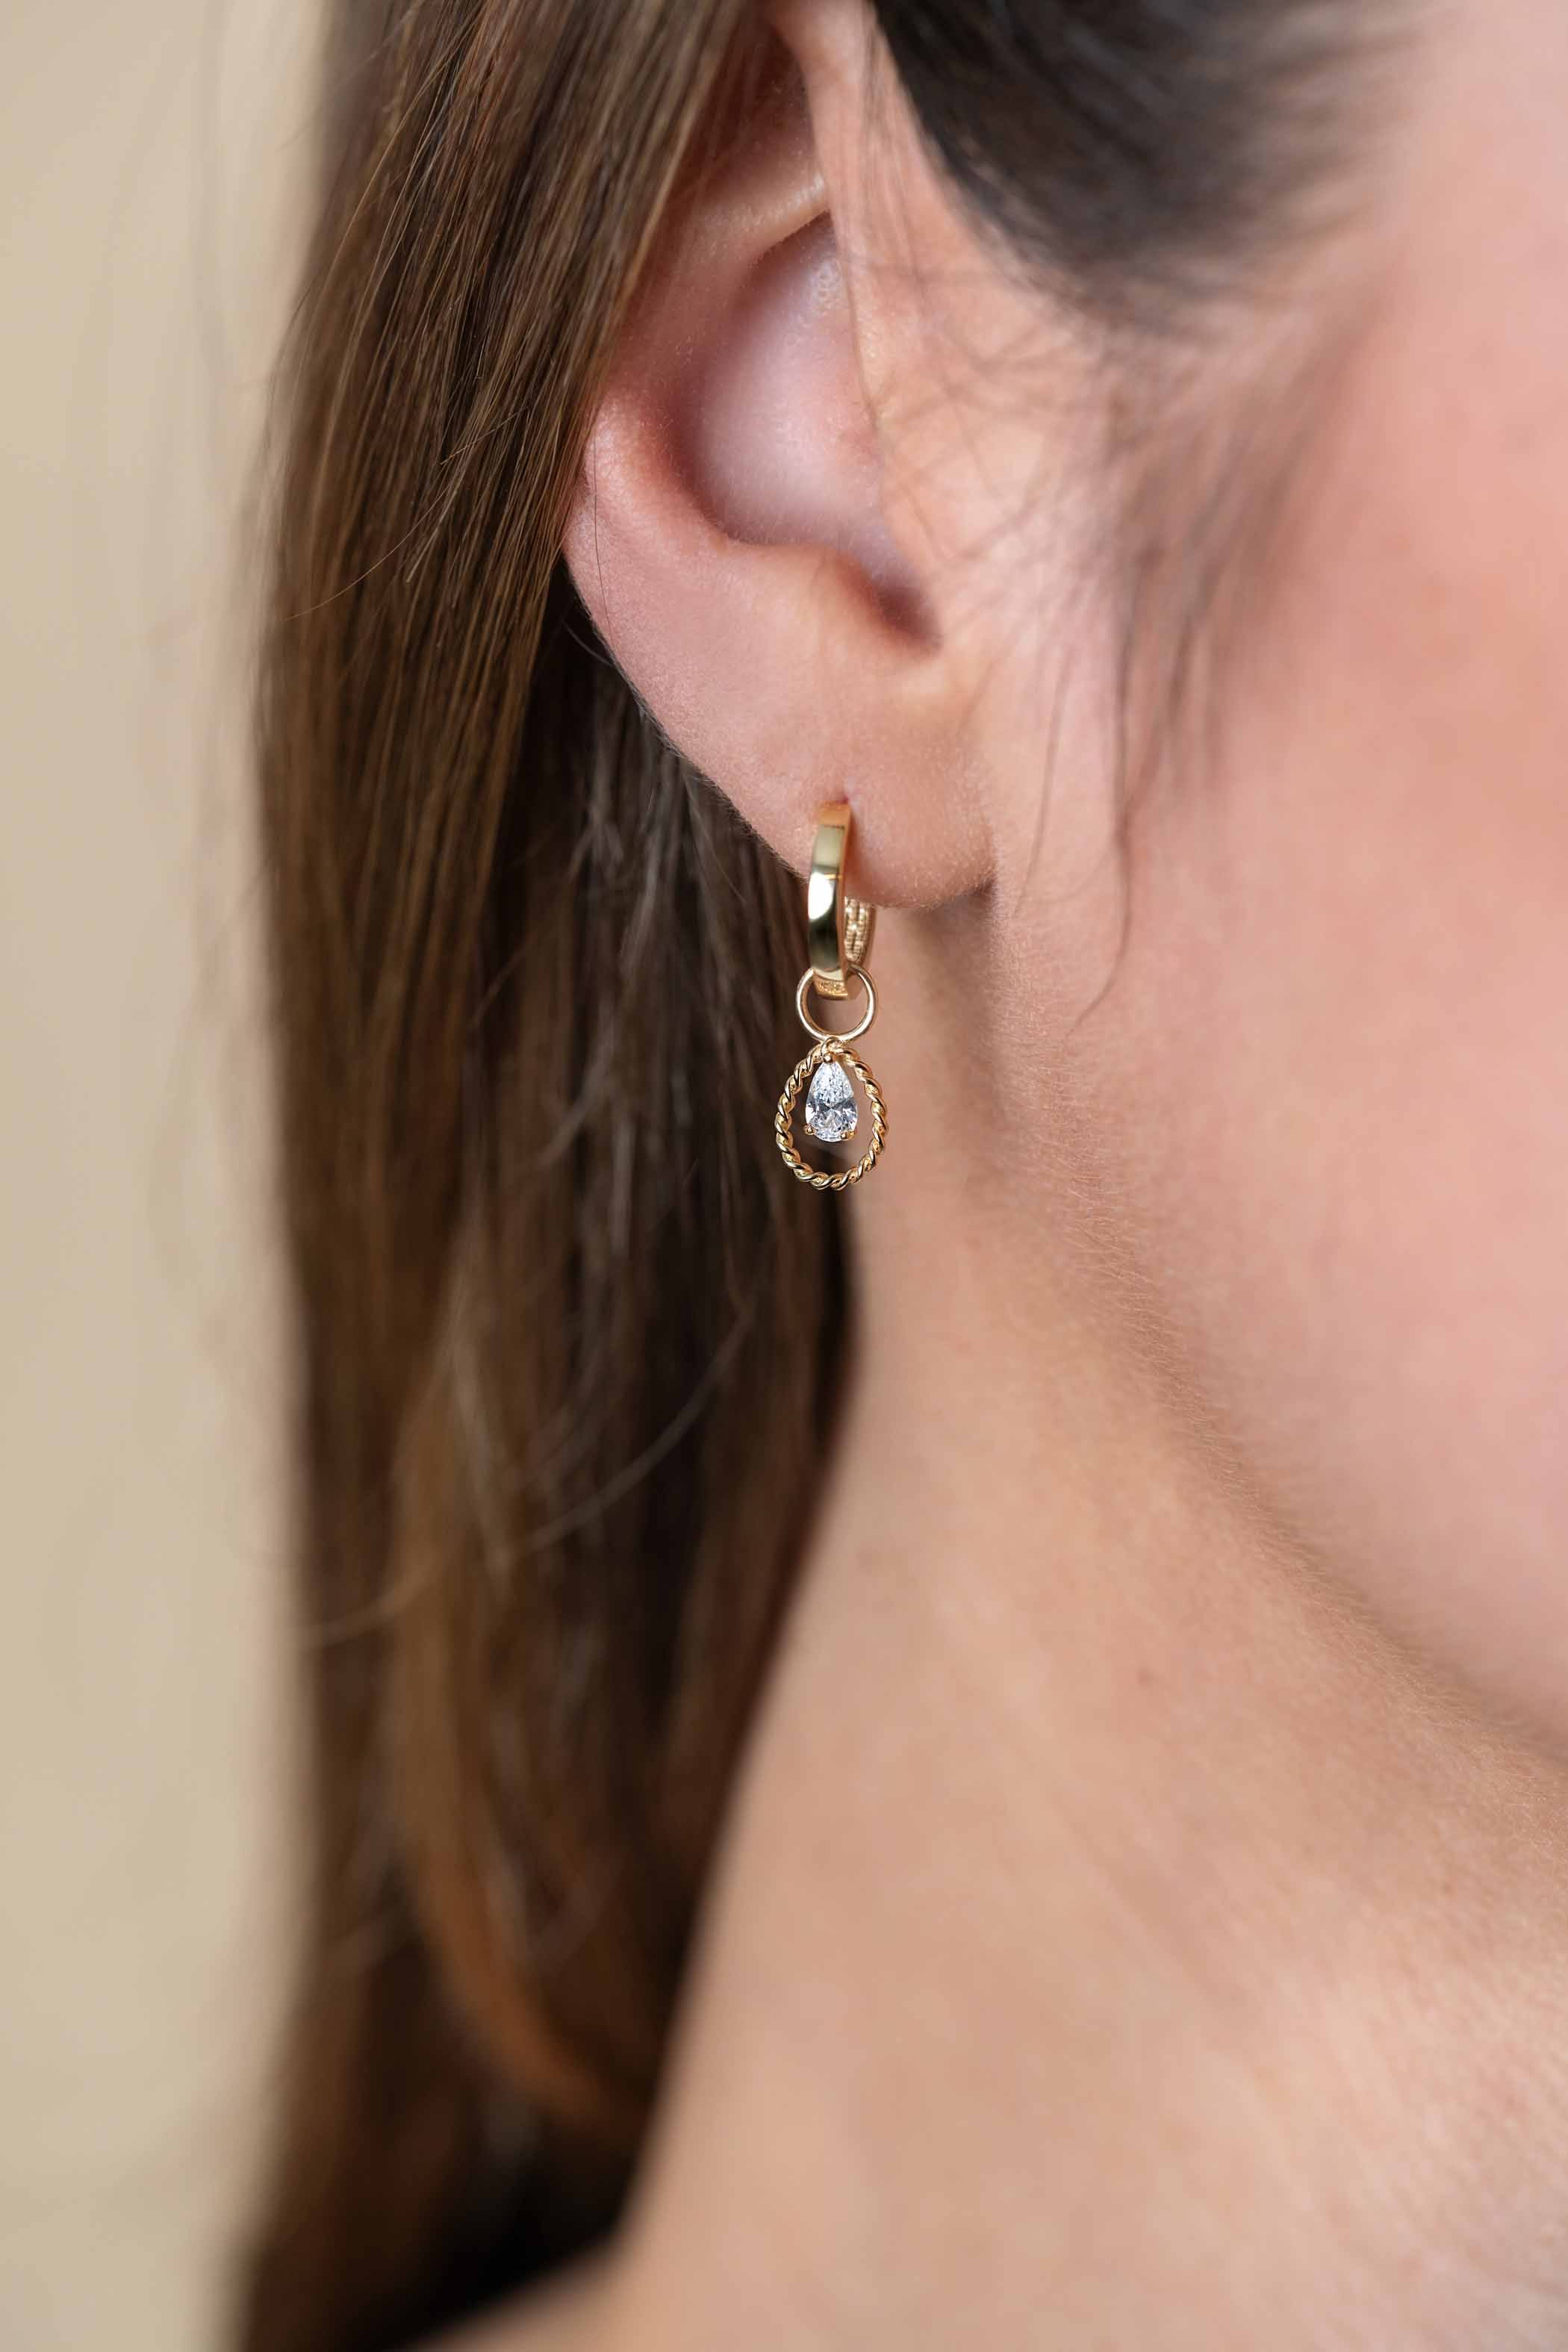 ZINZI 14K Gold Earrings Pendants Drop White Zirconia ZGCH478 (excl. hoop earrings)